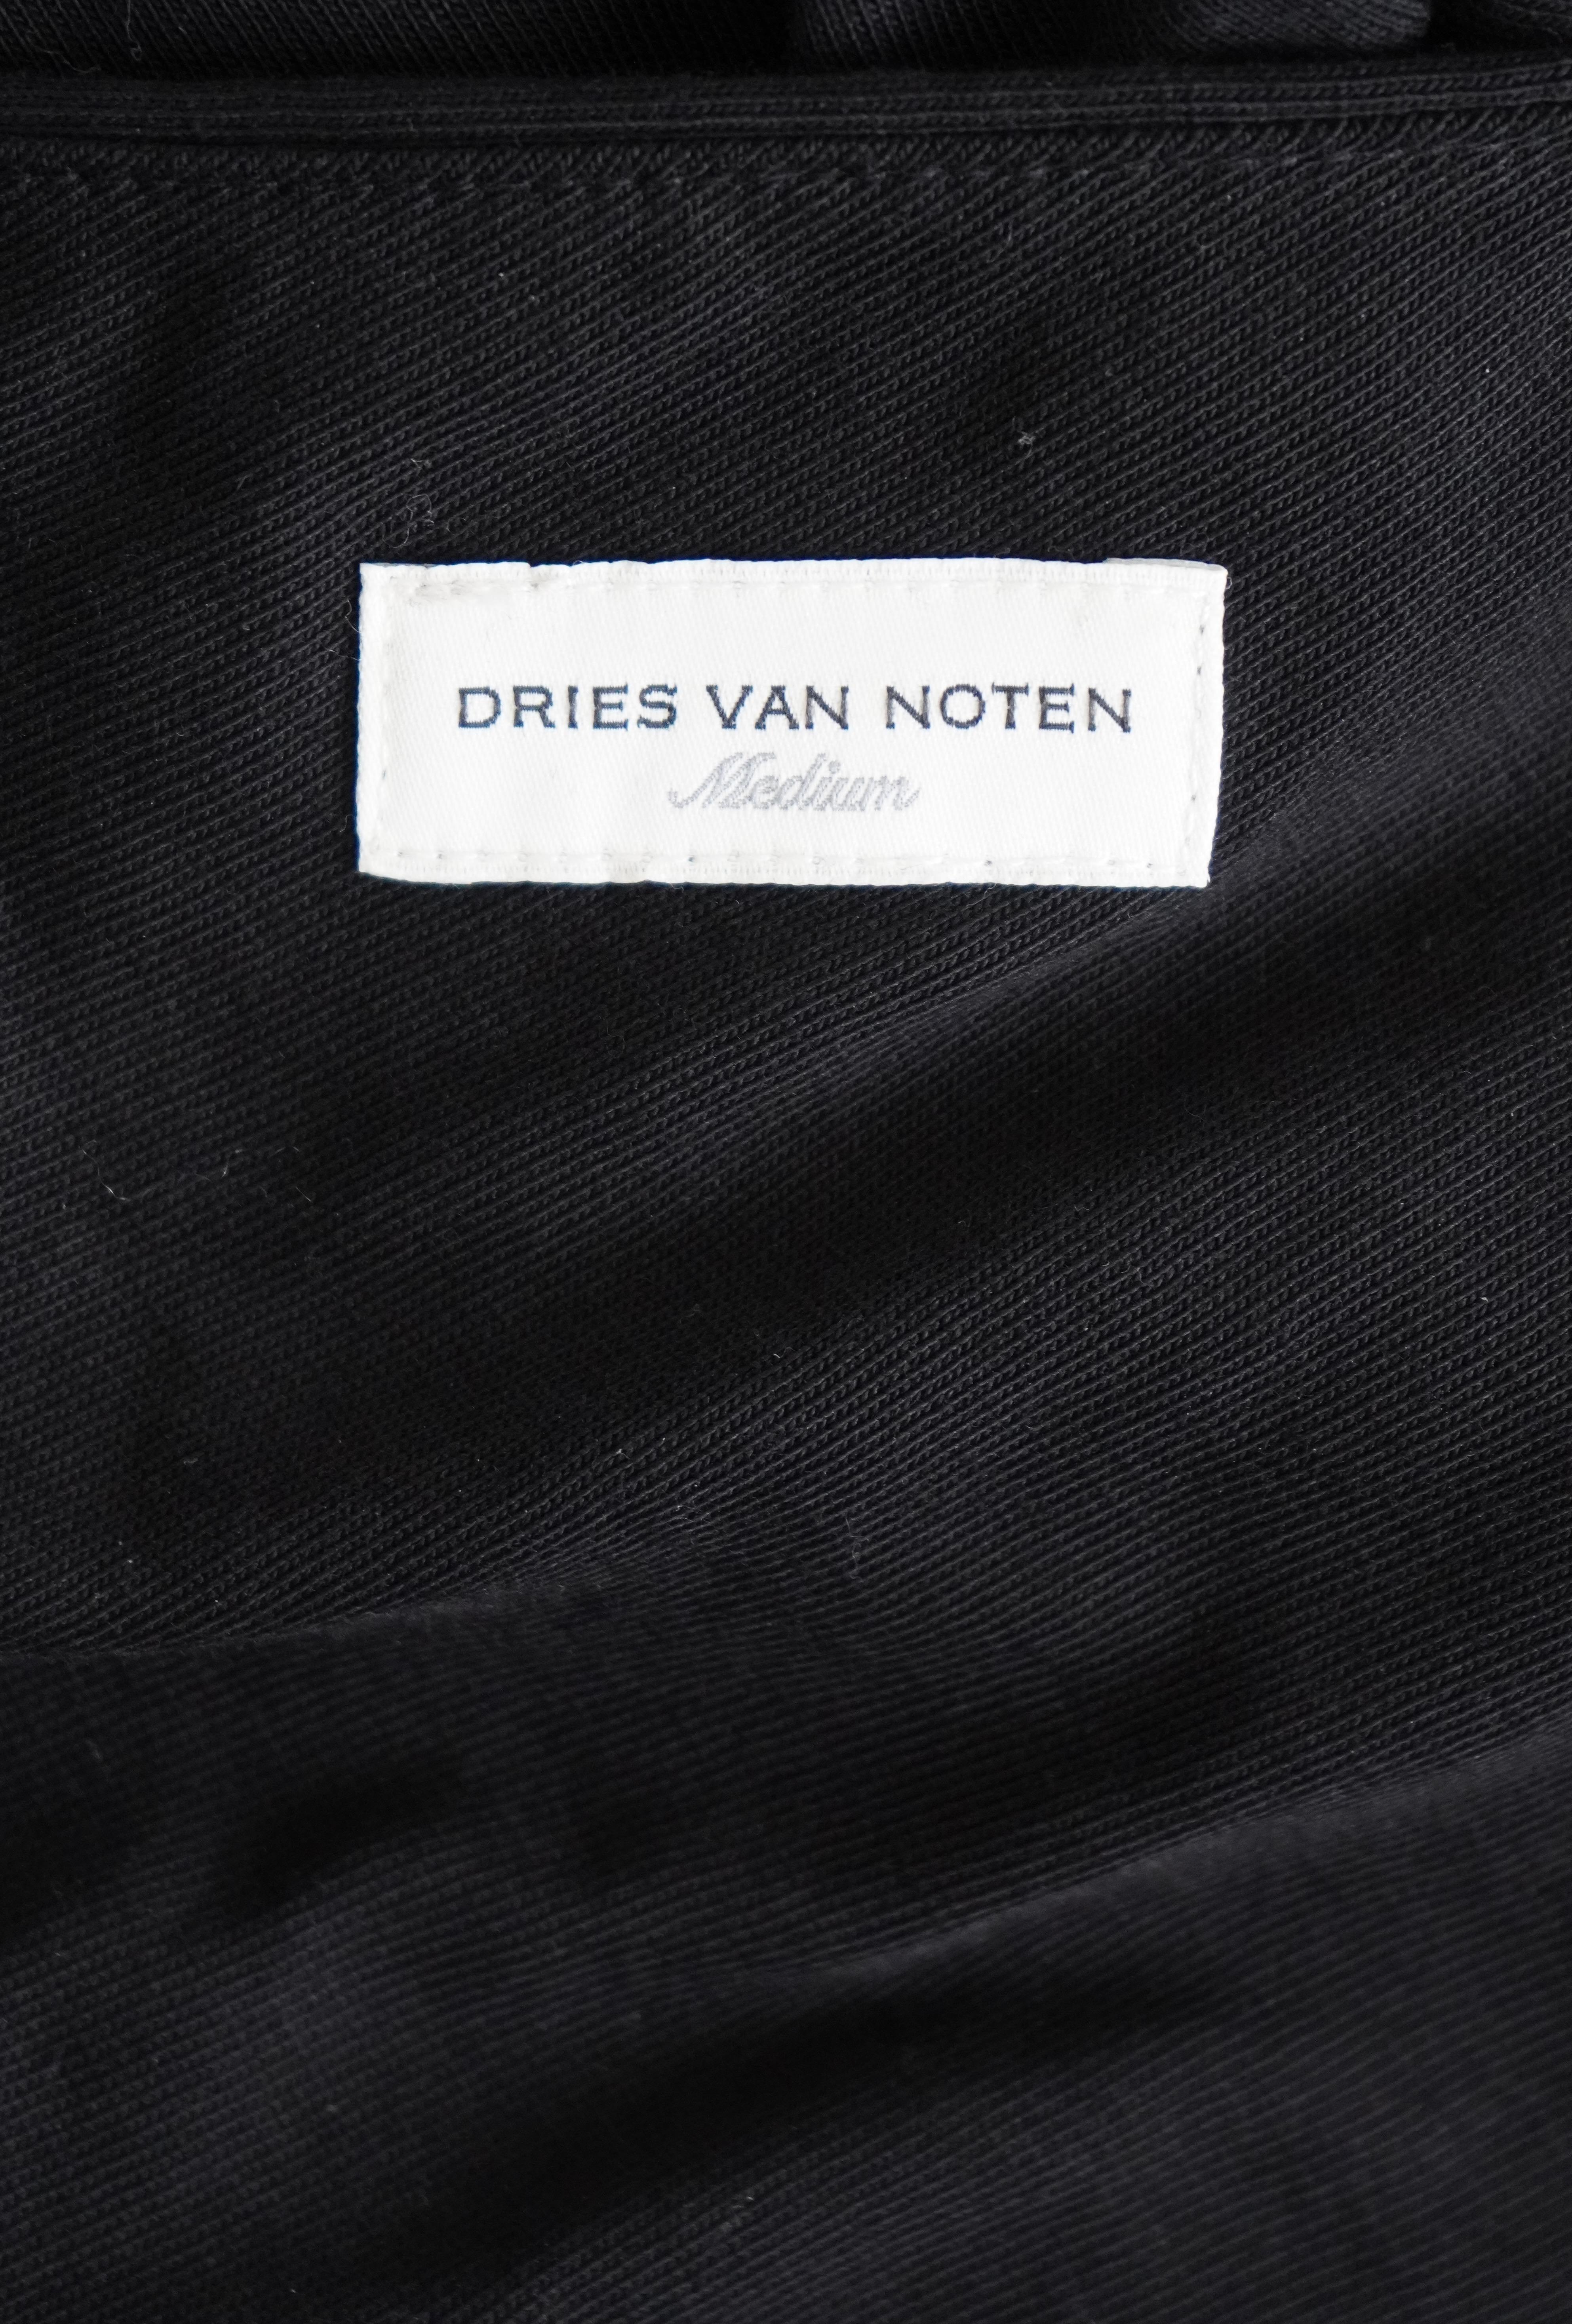 Dries Van Noten Black Midi Deep V Dress For Sale 5